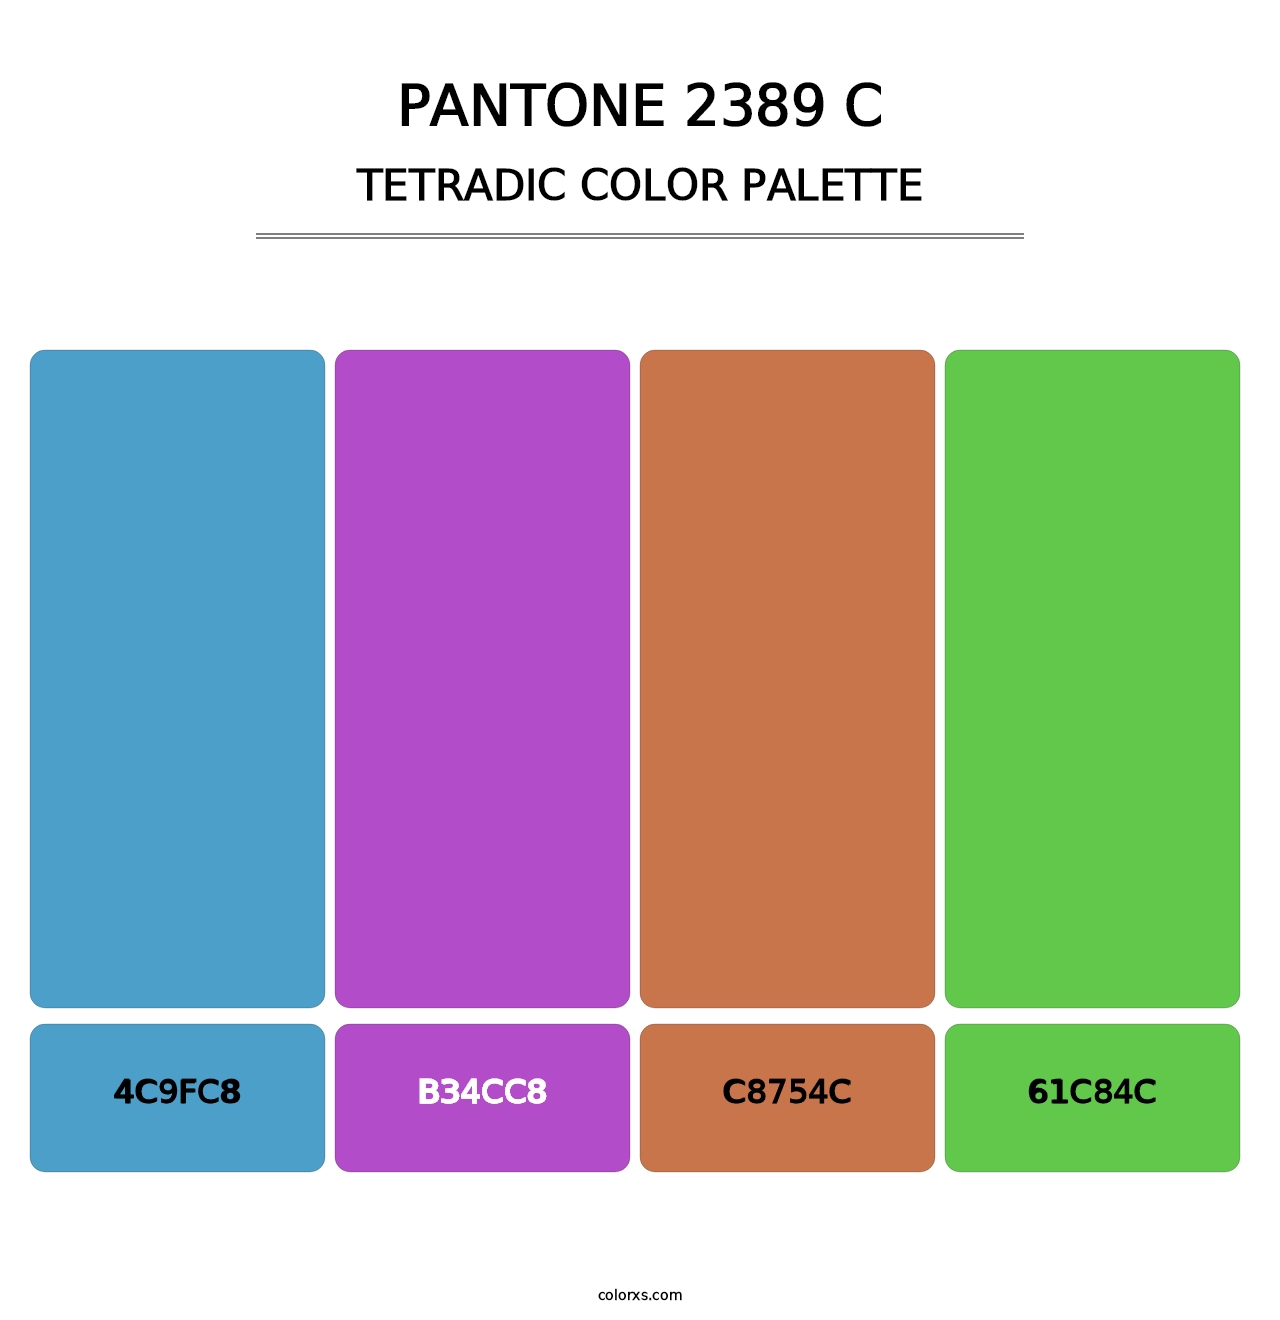 PANTONE 2389 C - Tetradic Color Palette